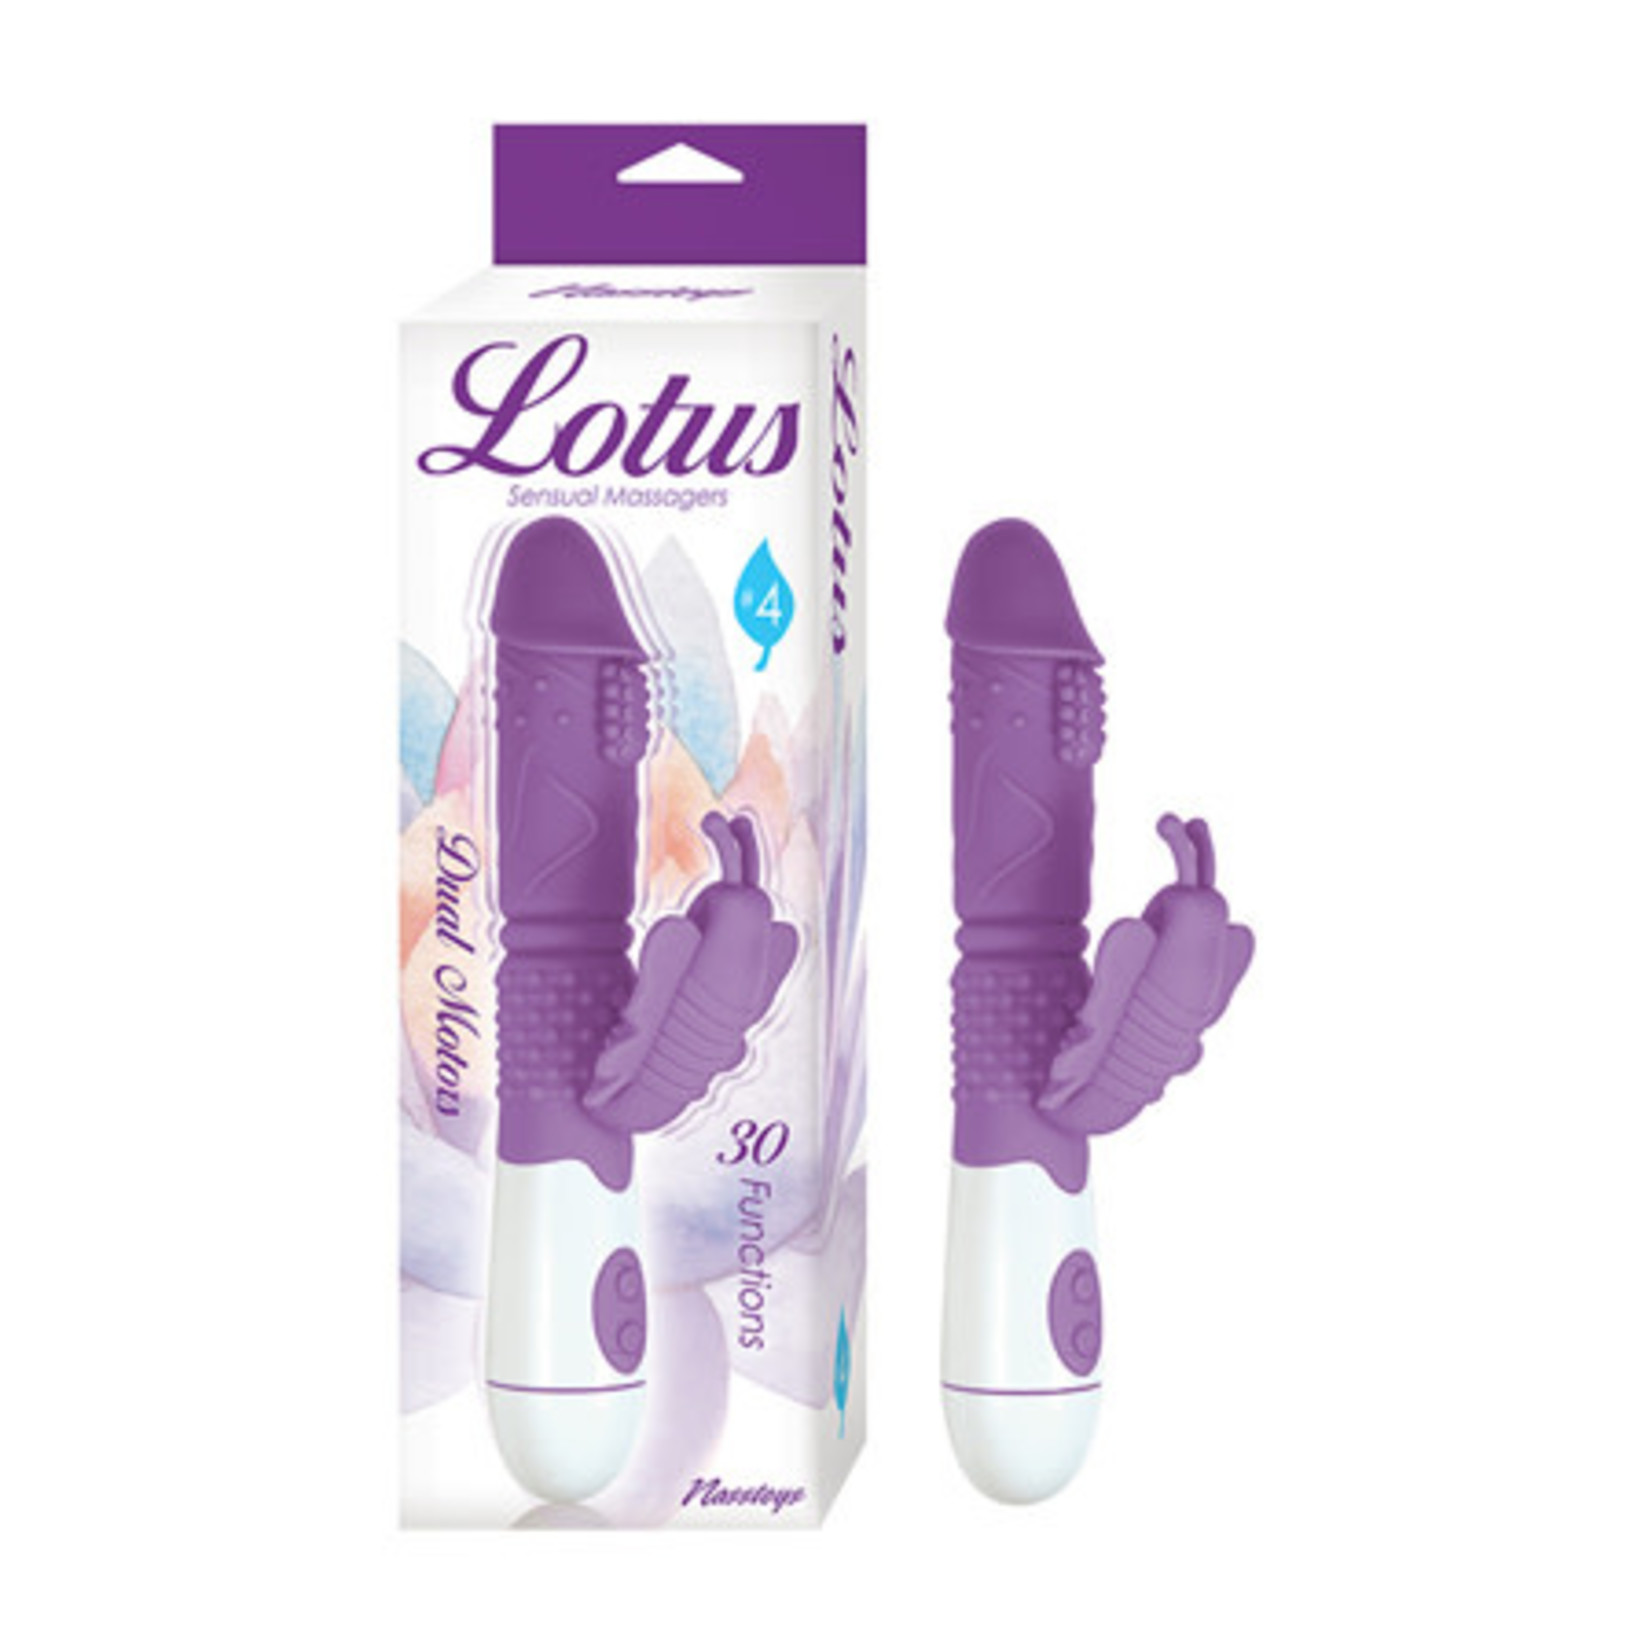 Lotus Sensual Massagers #4 Dual Stimulator Silicone Purple